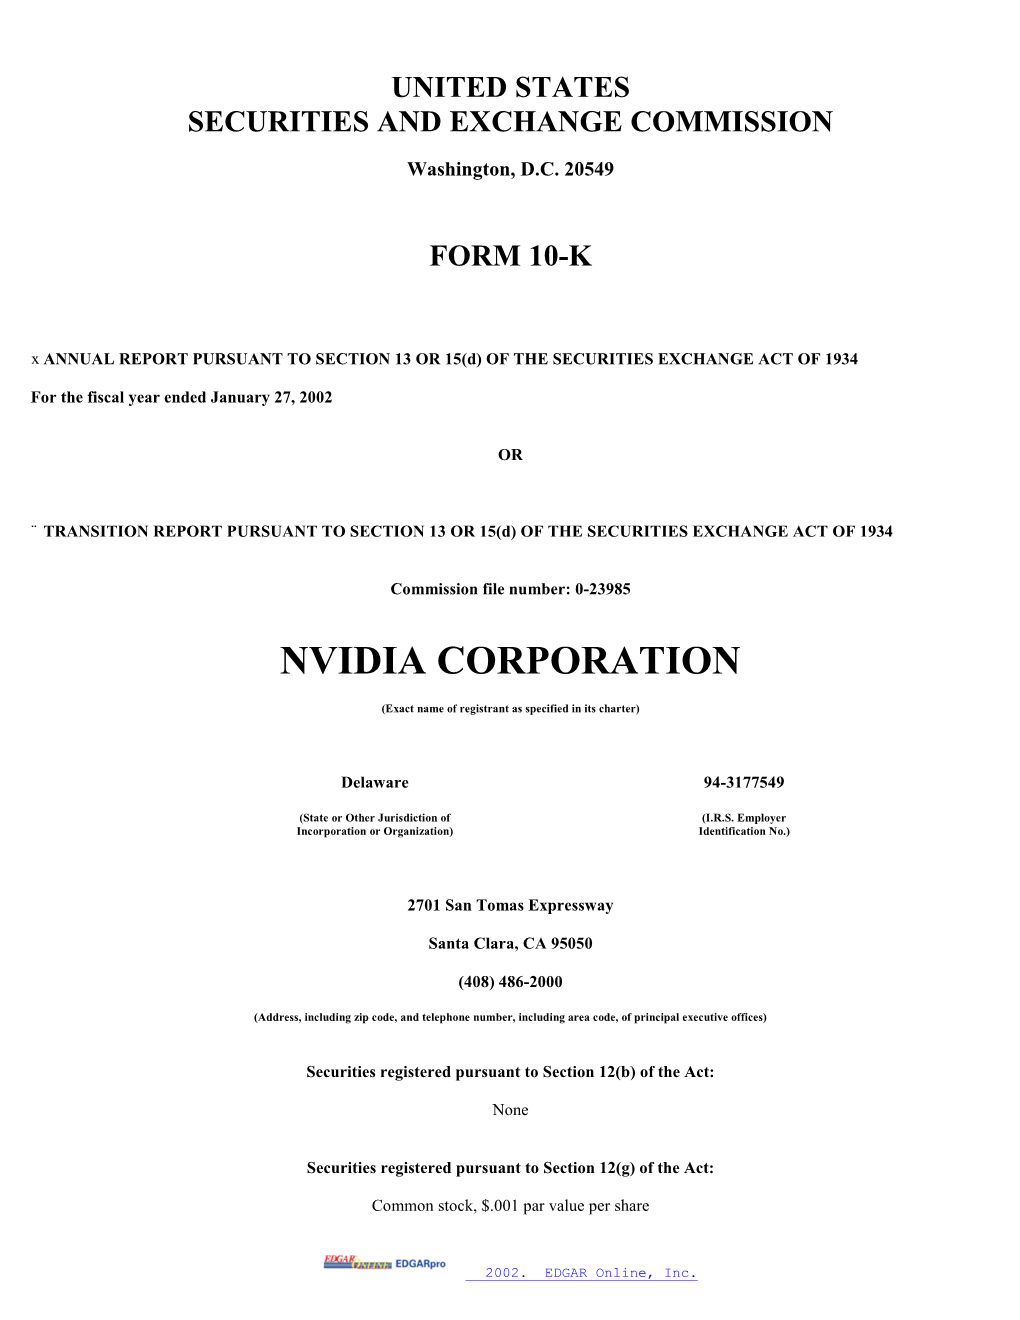 NVIDIA CORP/CA(Form: 10-K, Received